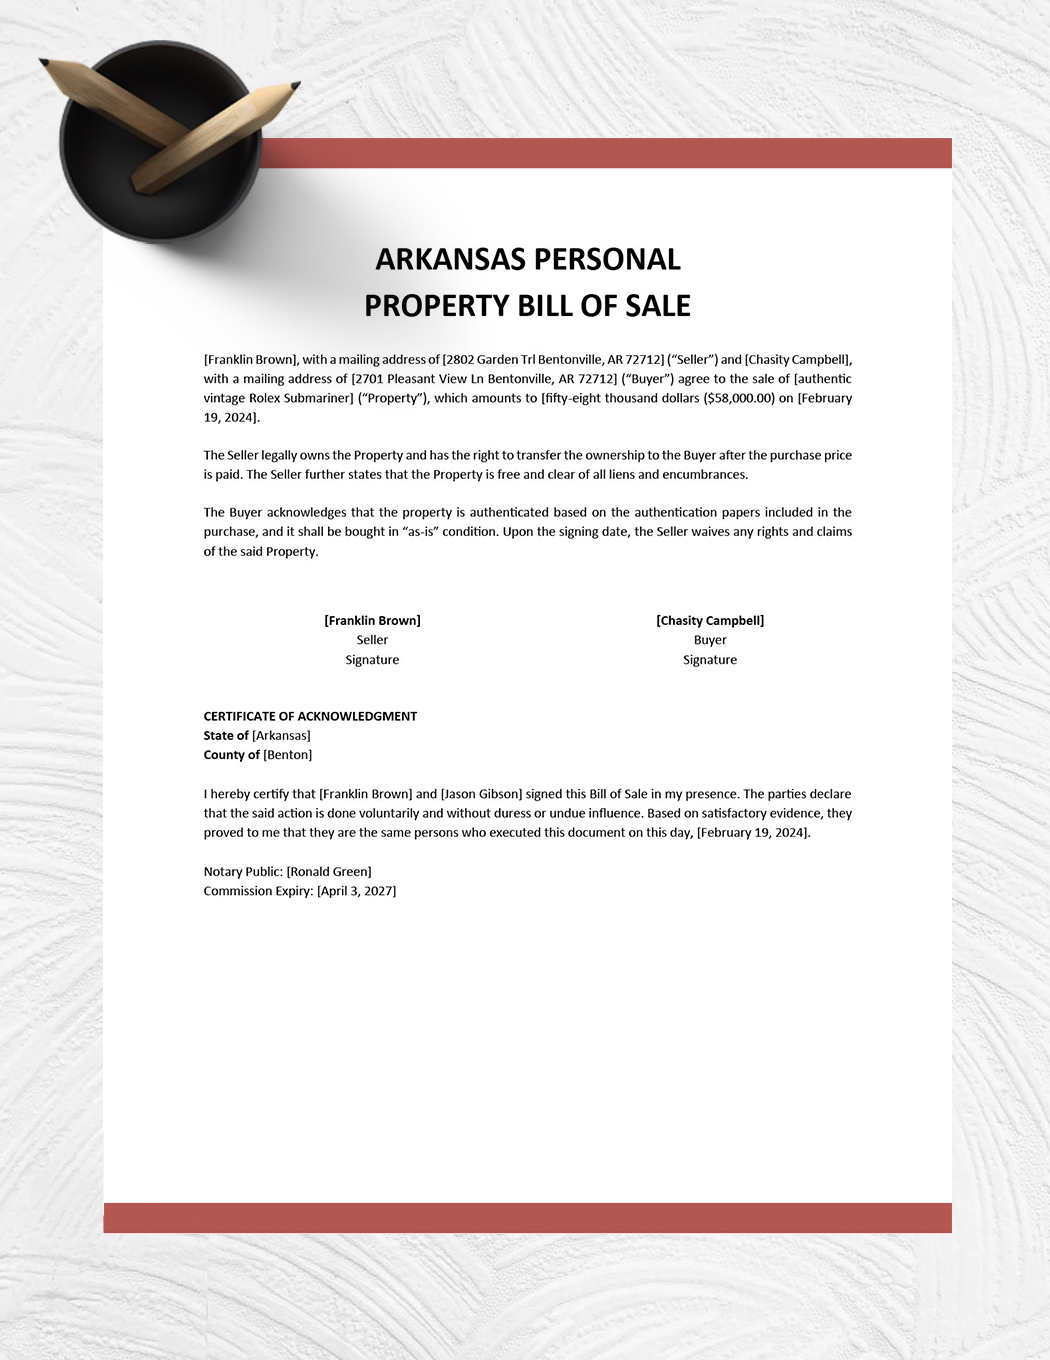 Arkansas Personal Property Bill of Sale Template